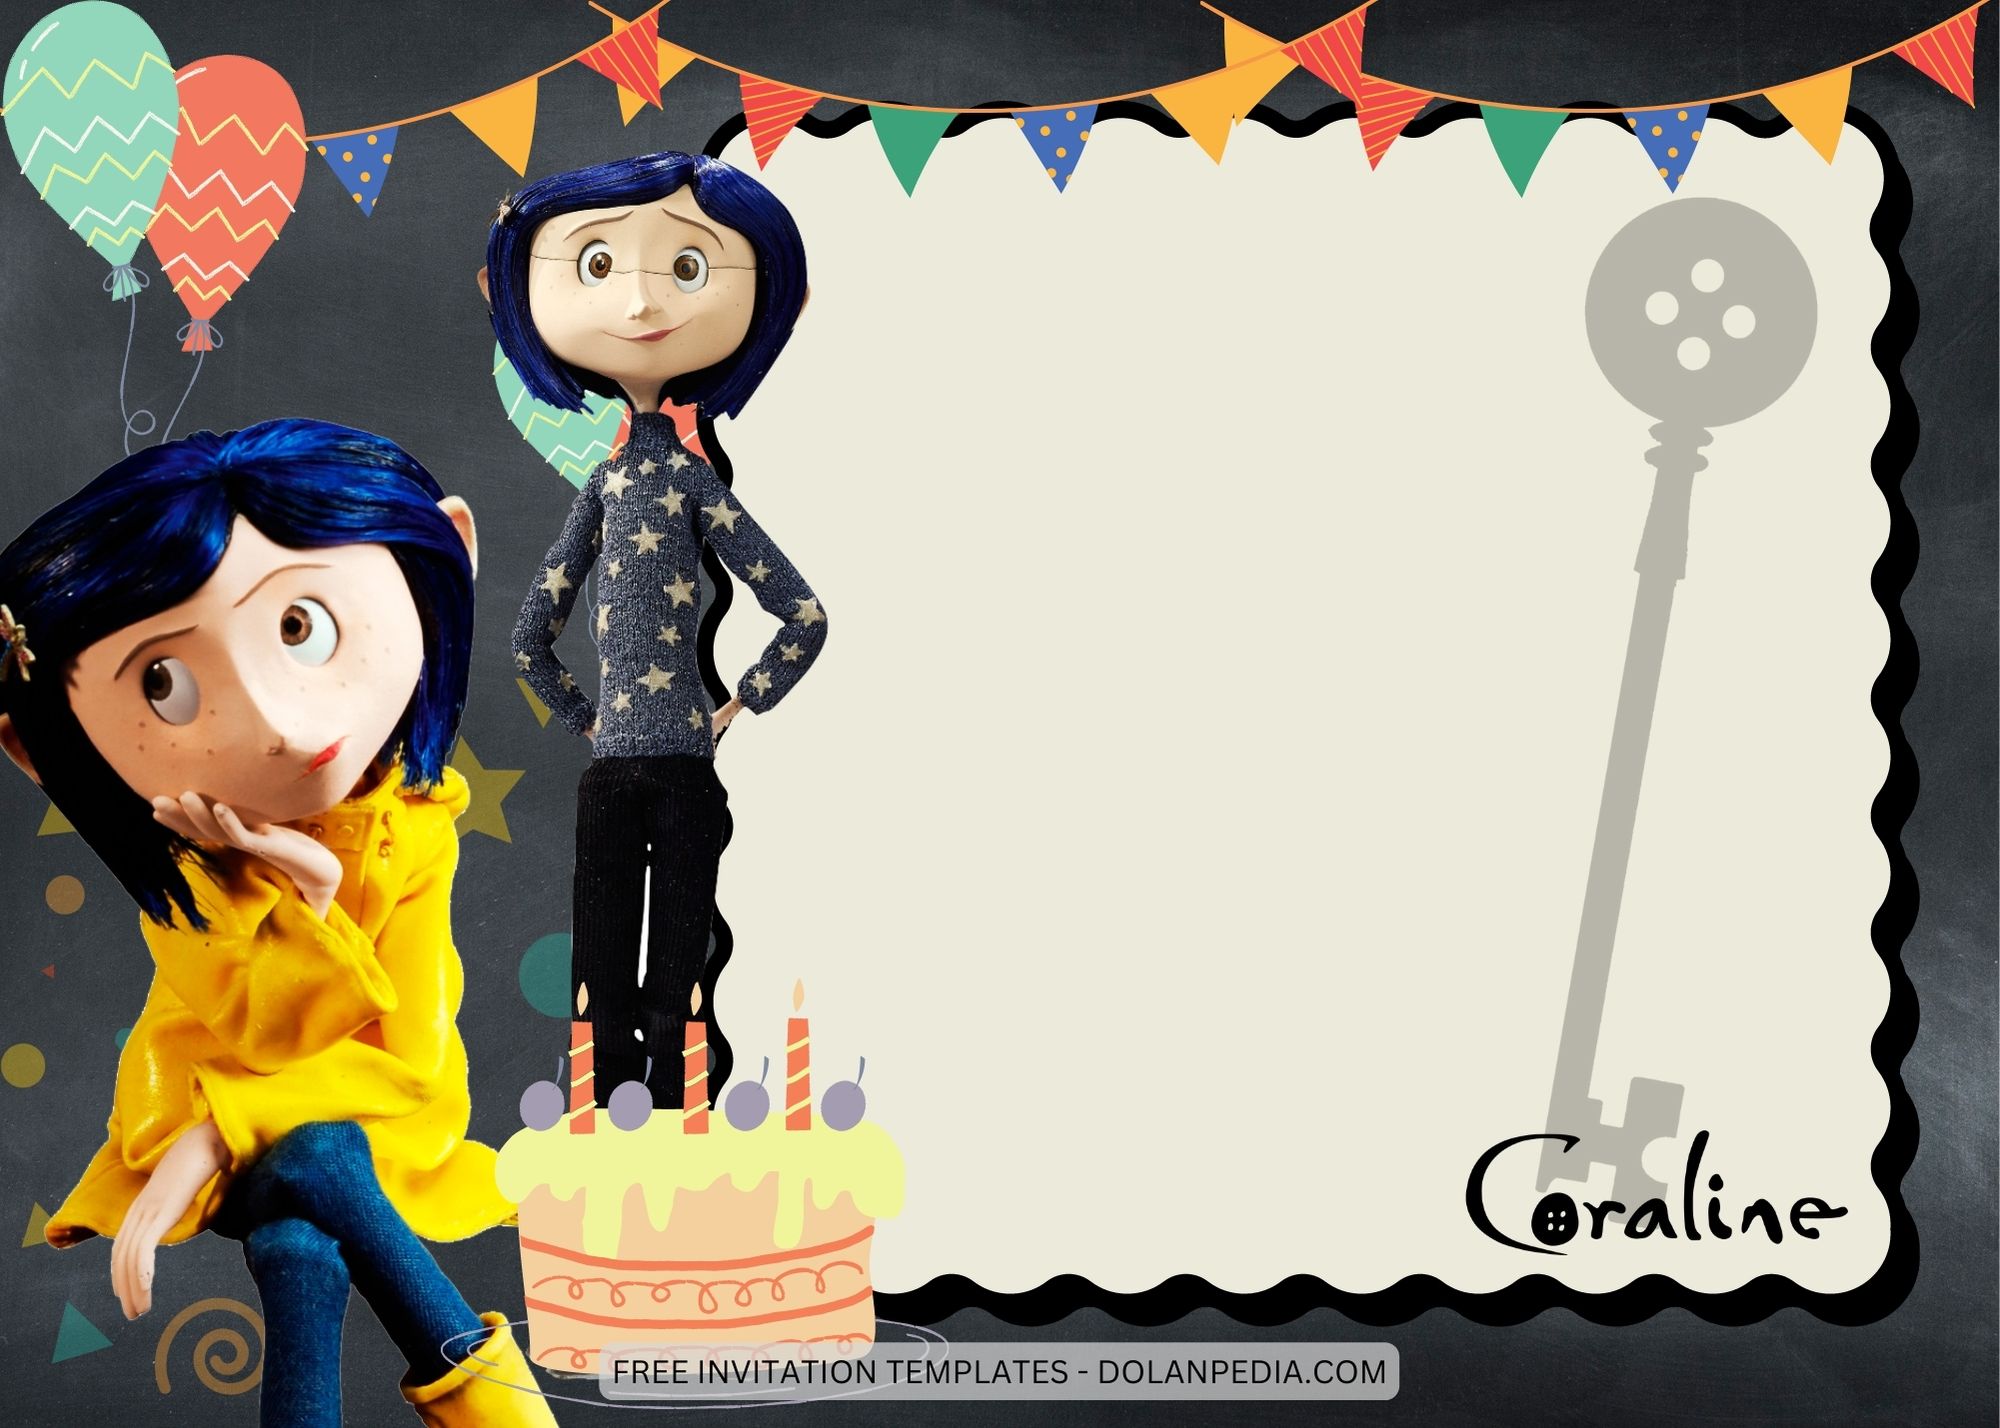 Blank Coraline Birthday Invitation Templates Five